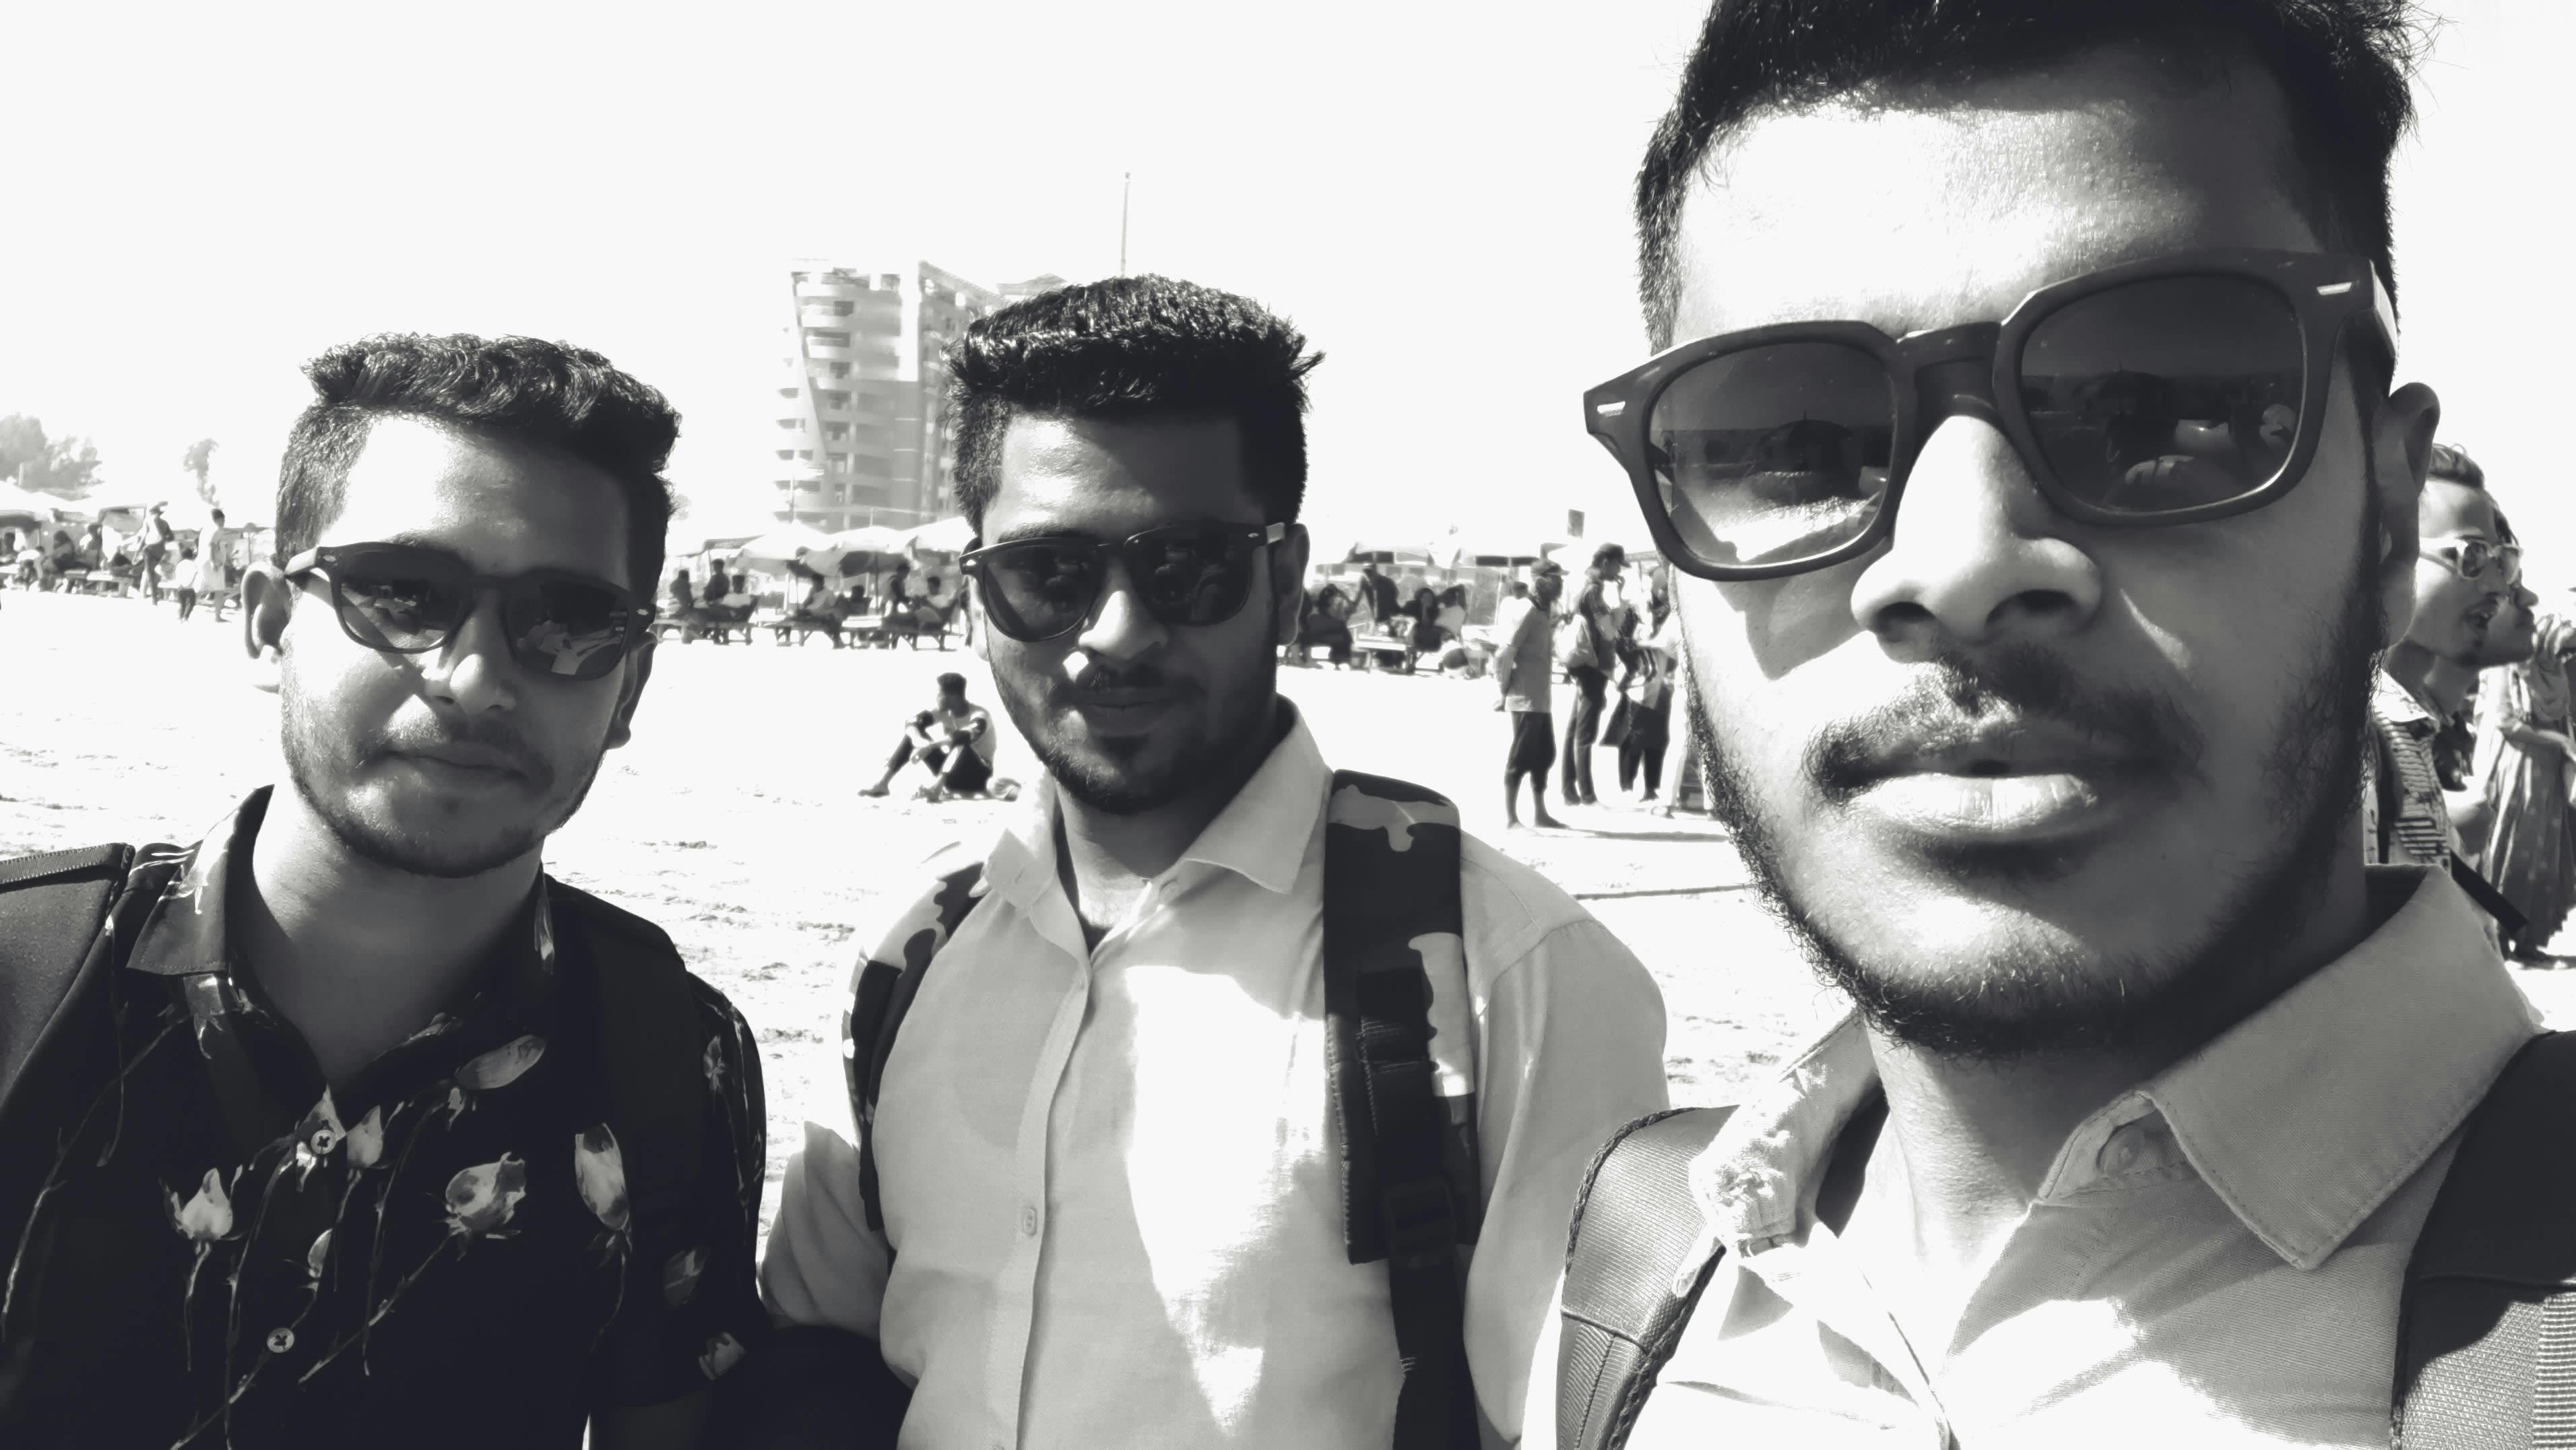 My friend Sojib, Arman and I